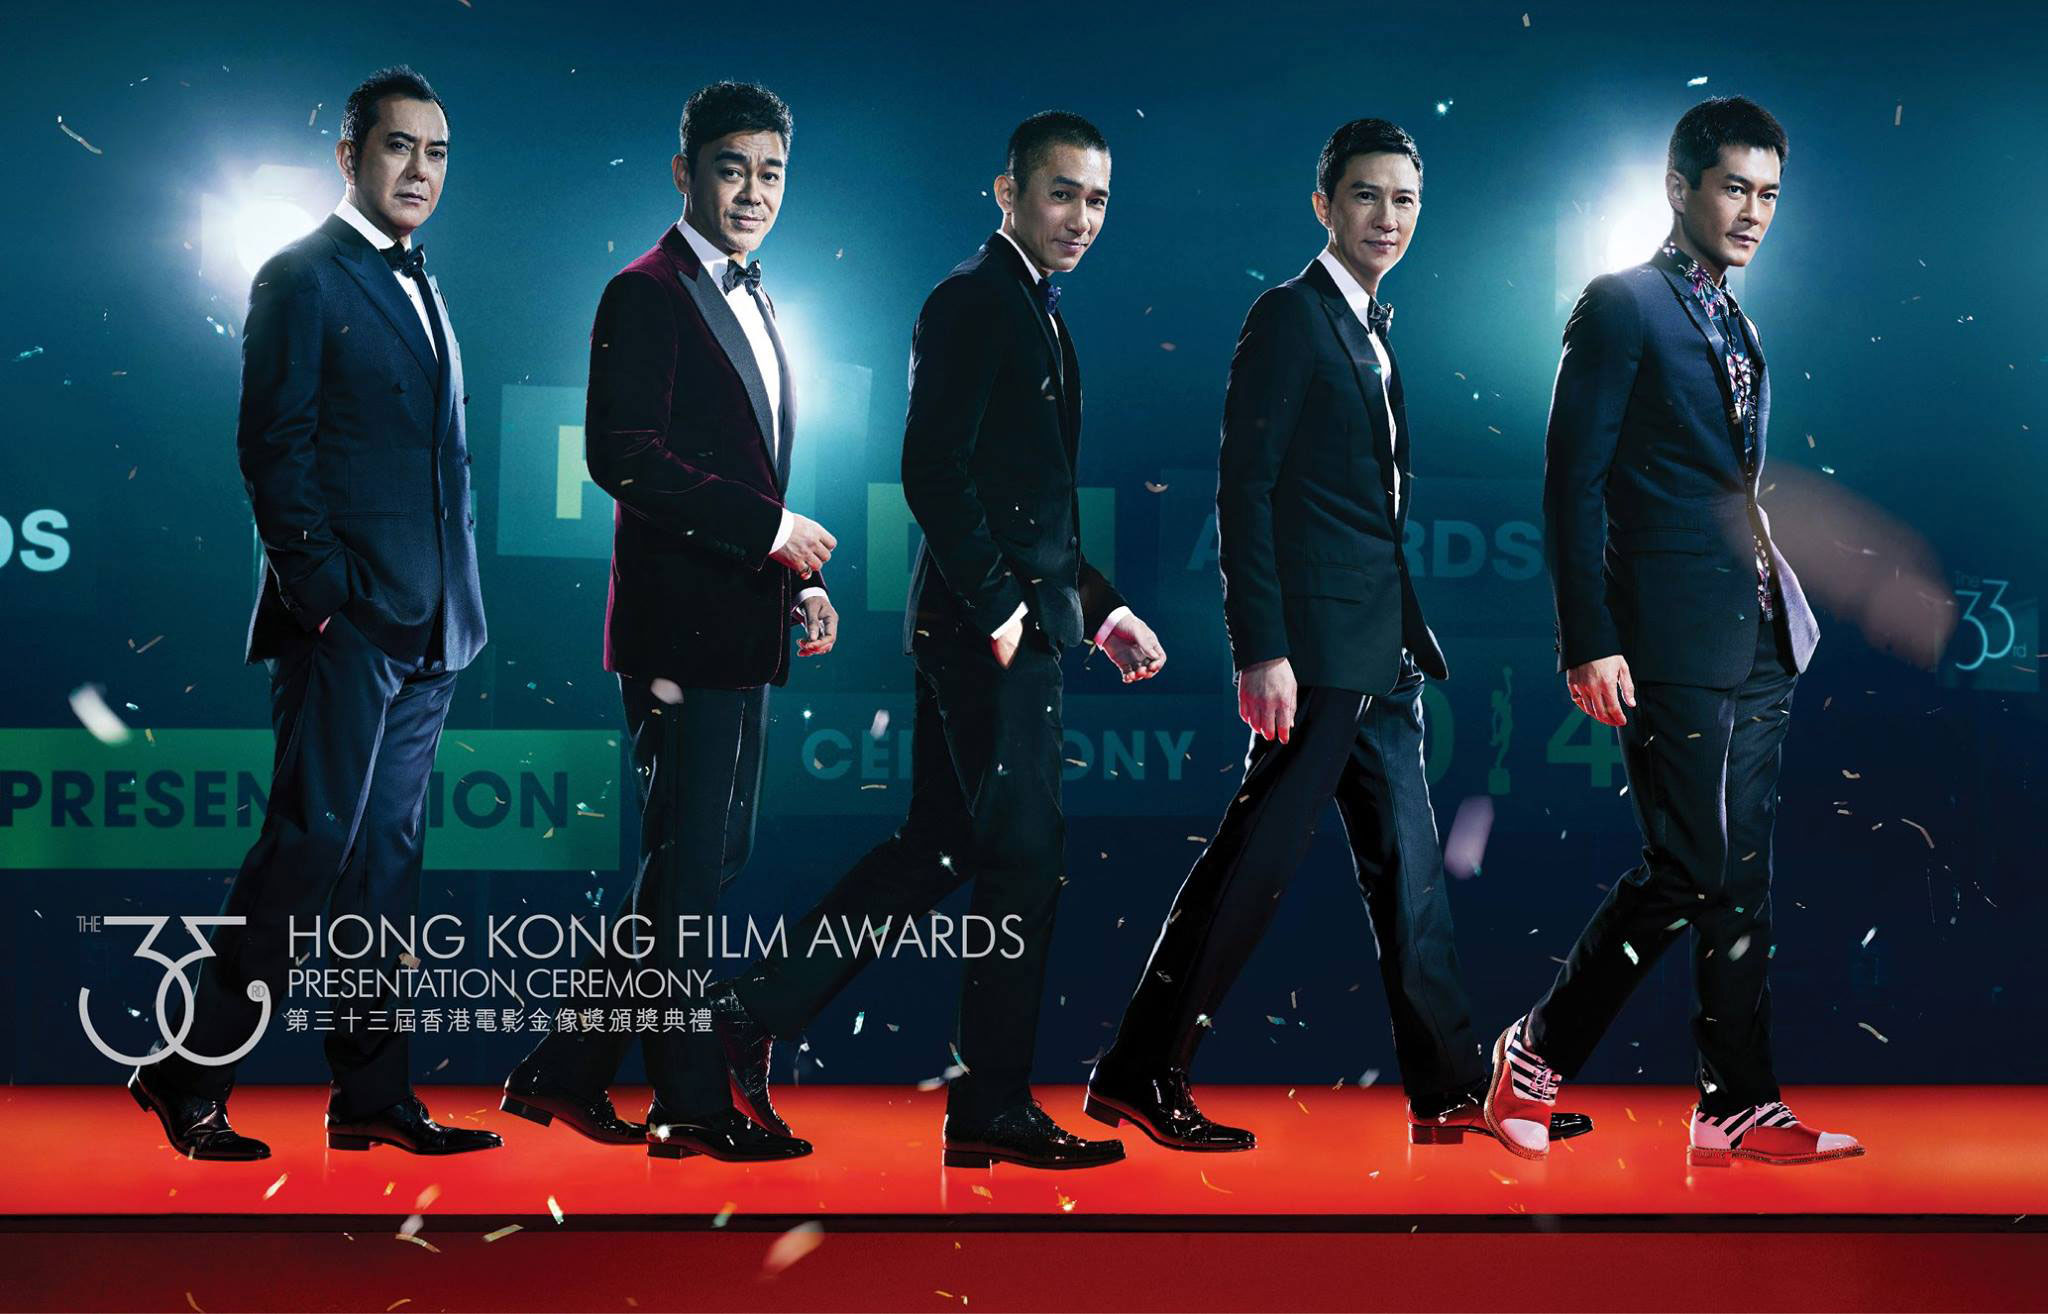 Hong Kong Film Awards 2014 best actor nominees